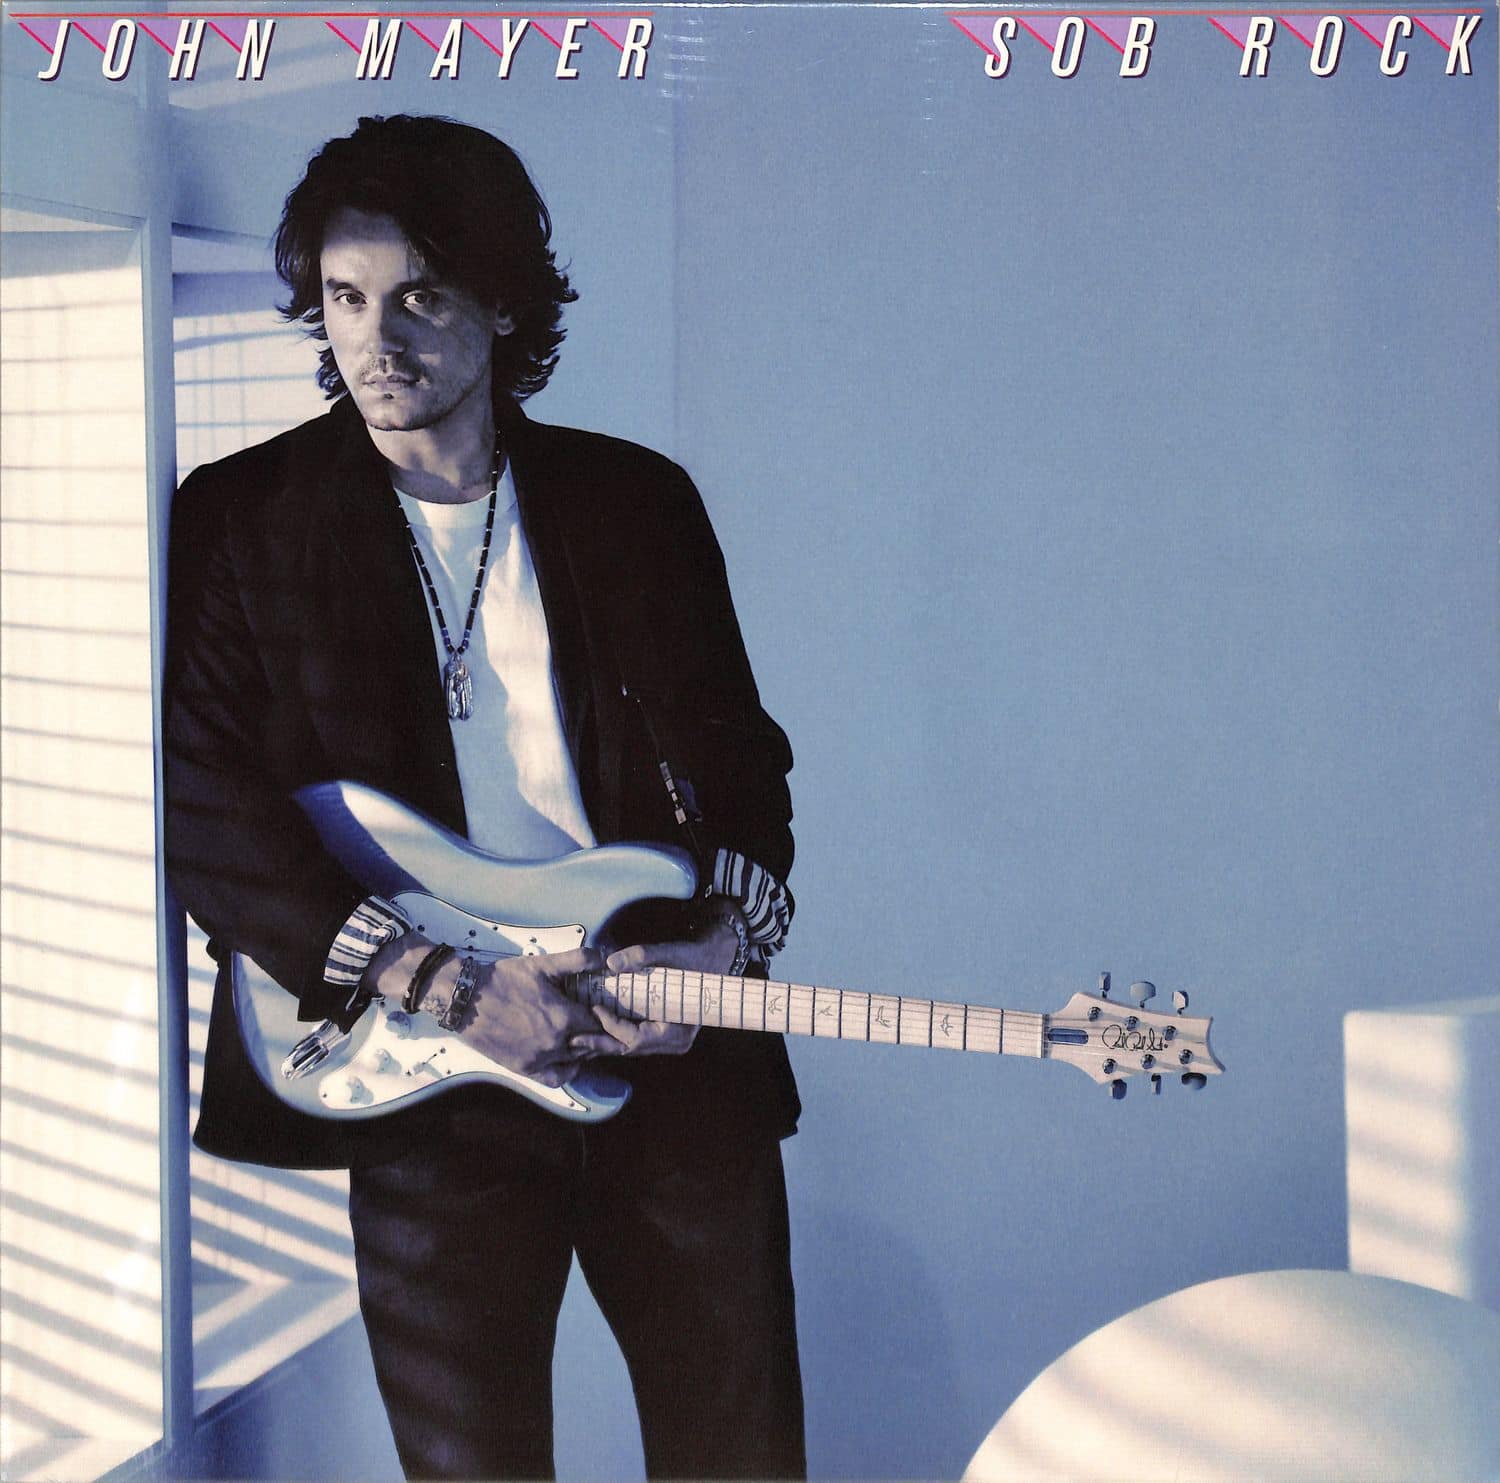 John Mayer - SOB ROCK 